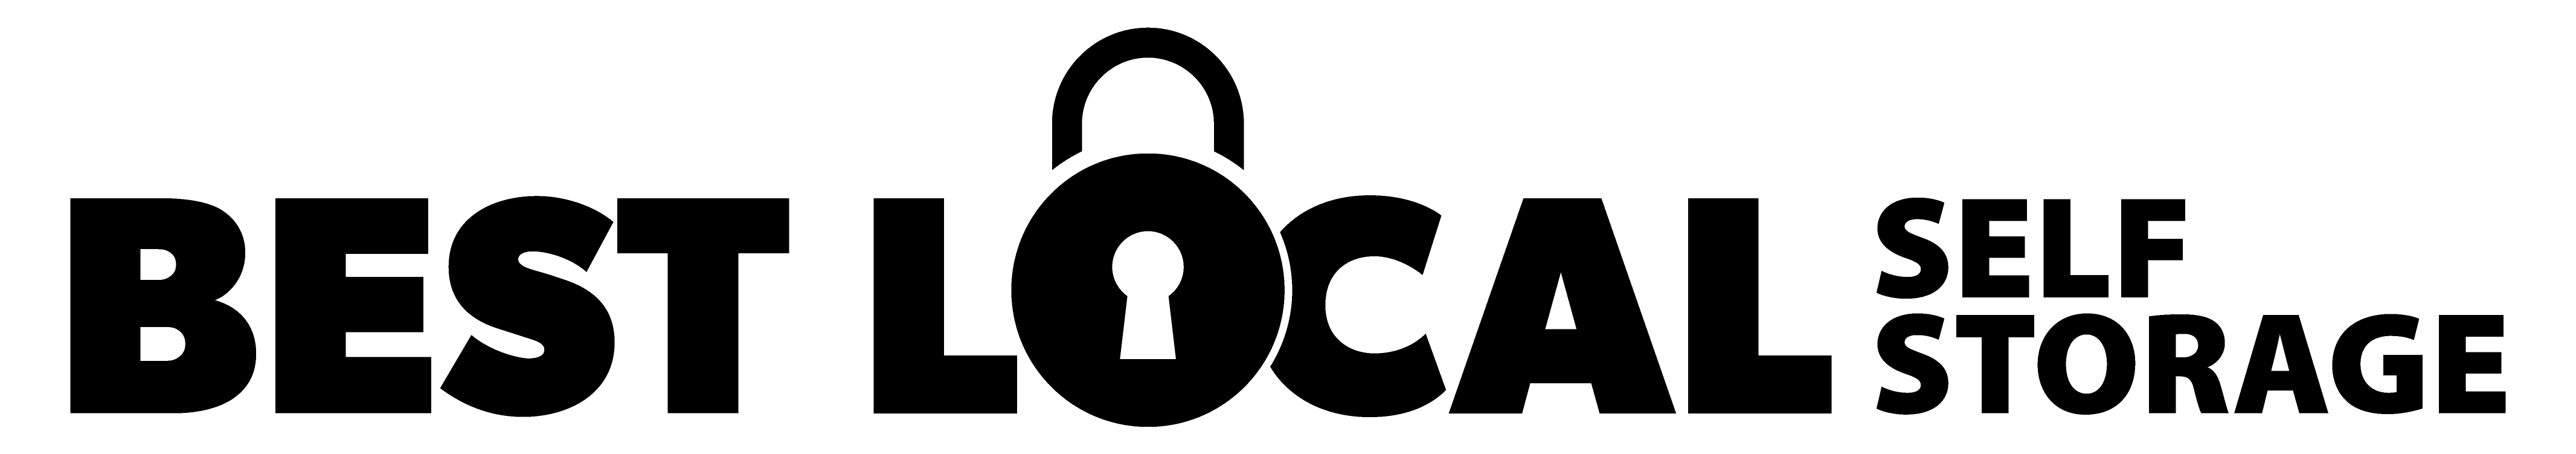 white background logo